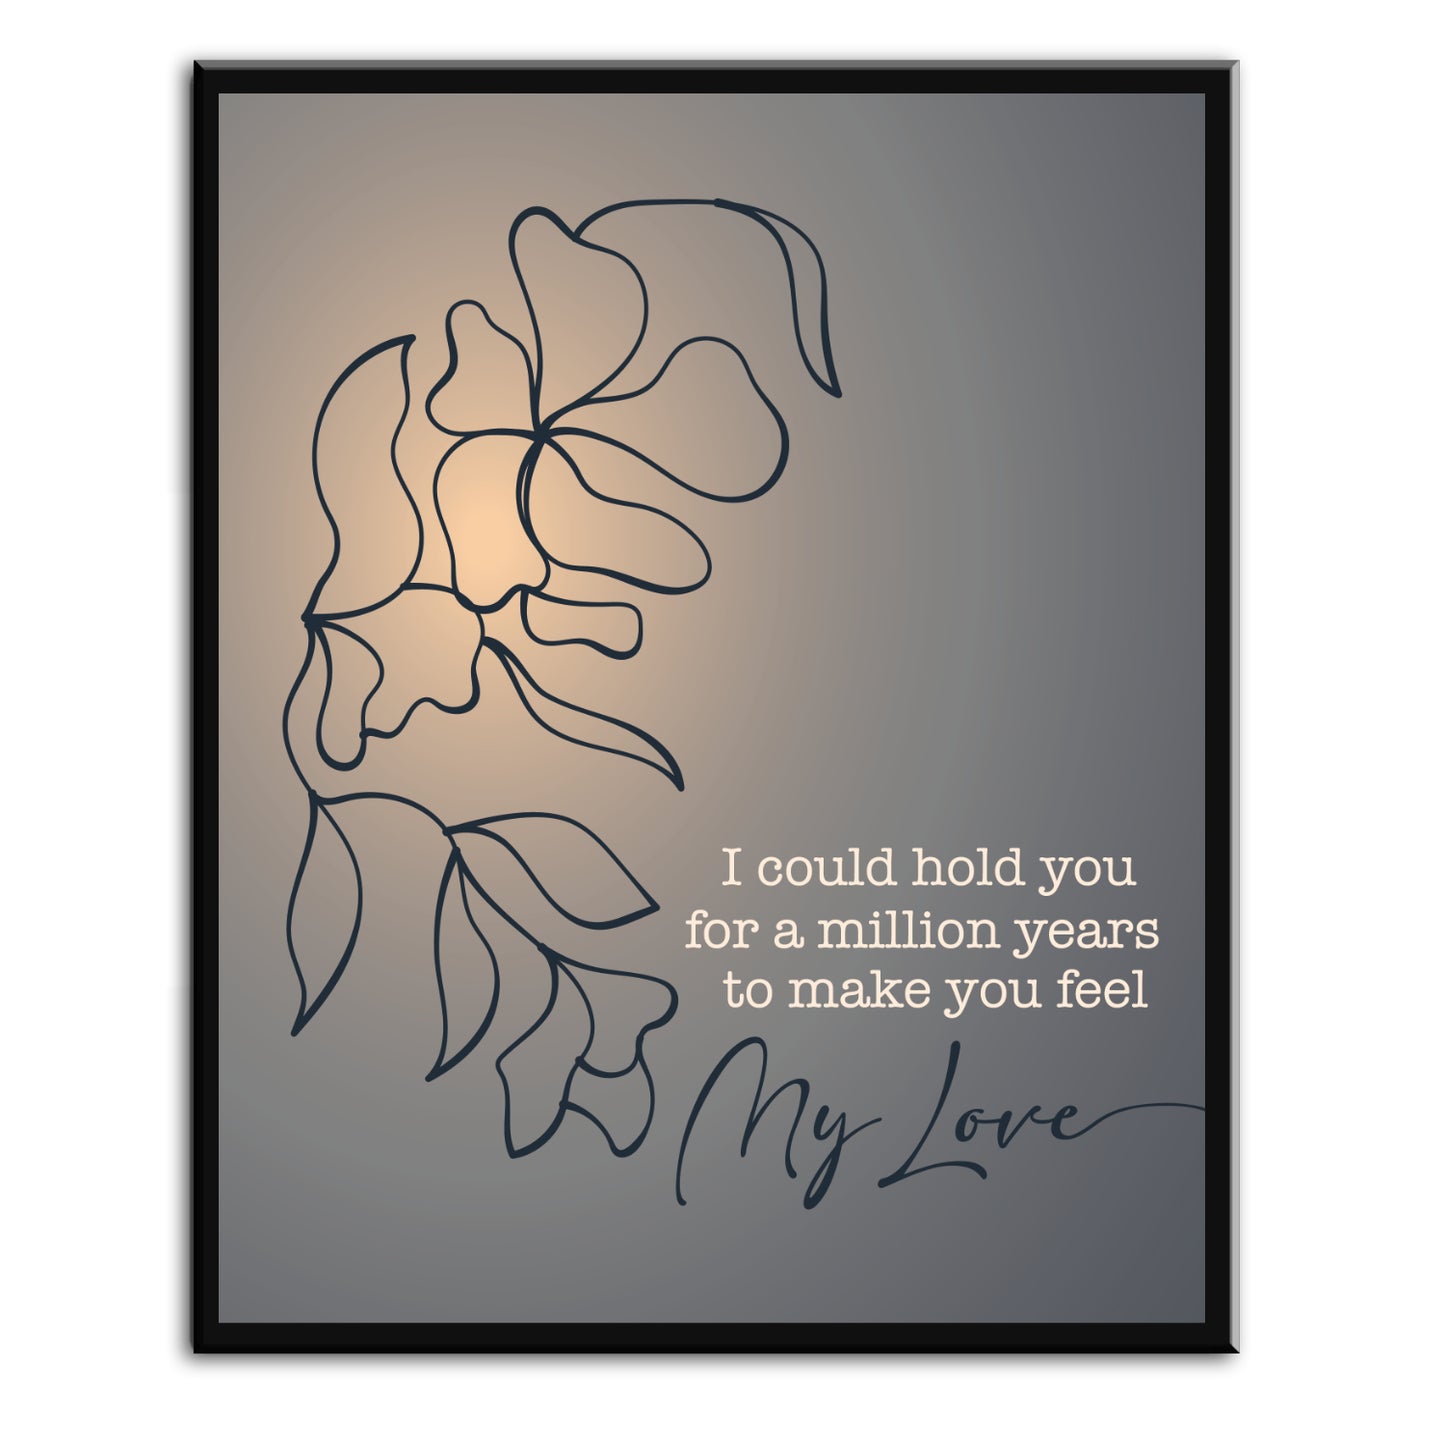 Make You Feel My Love by Bob Dylan - Lyric Inspired Wall Art Print